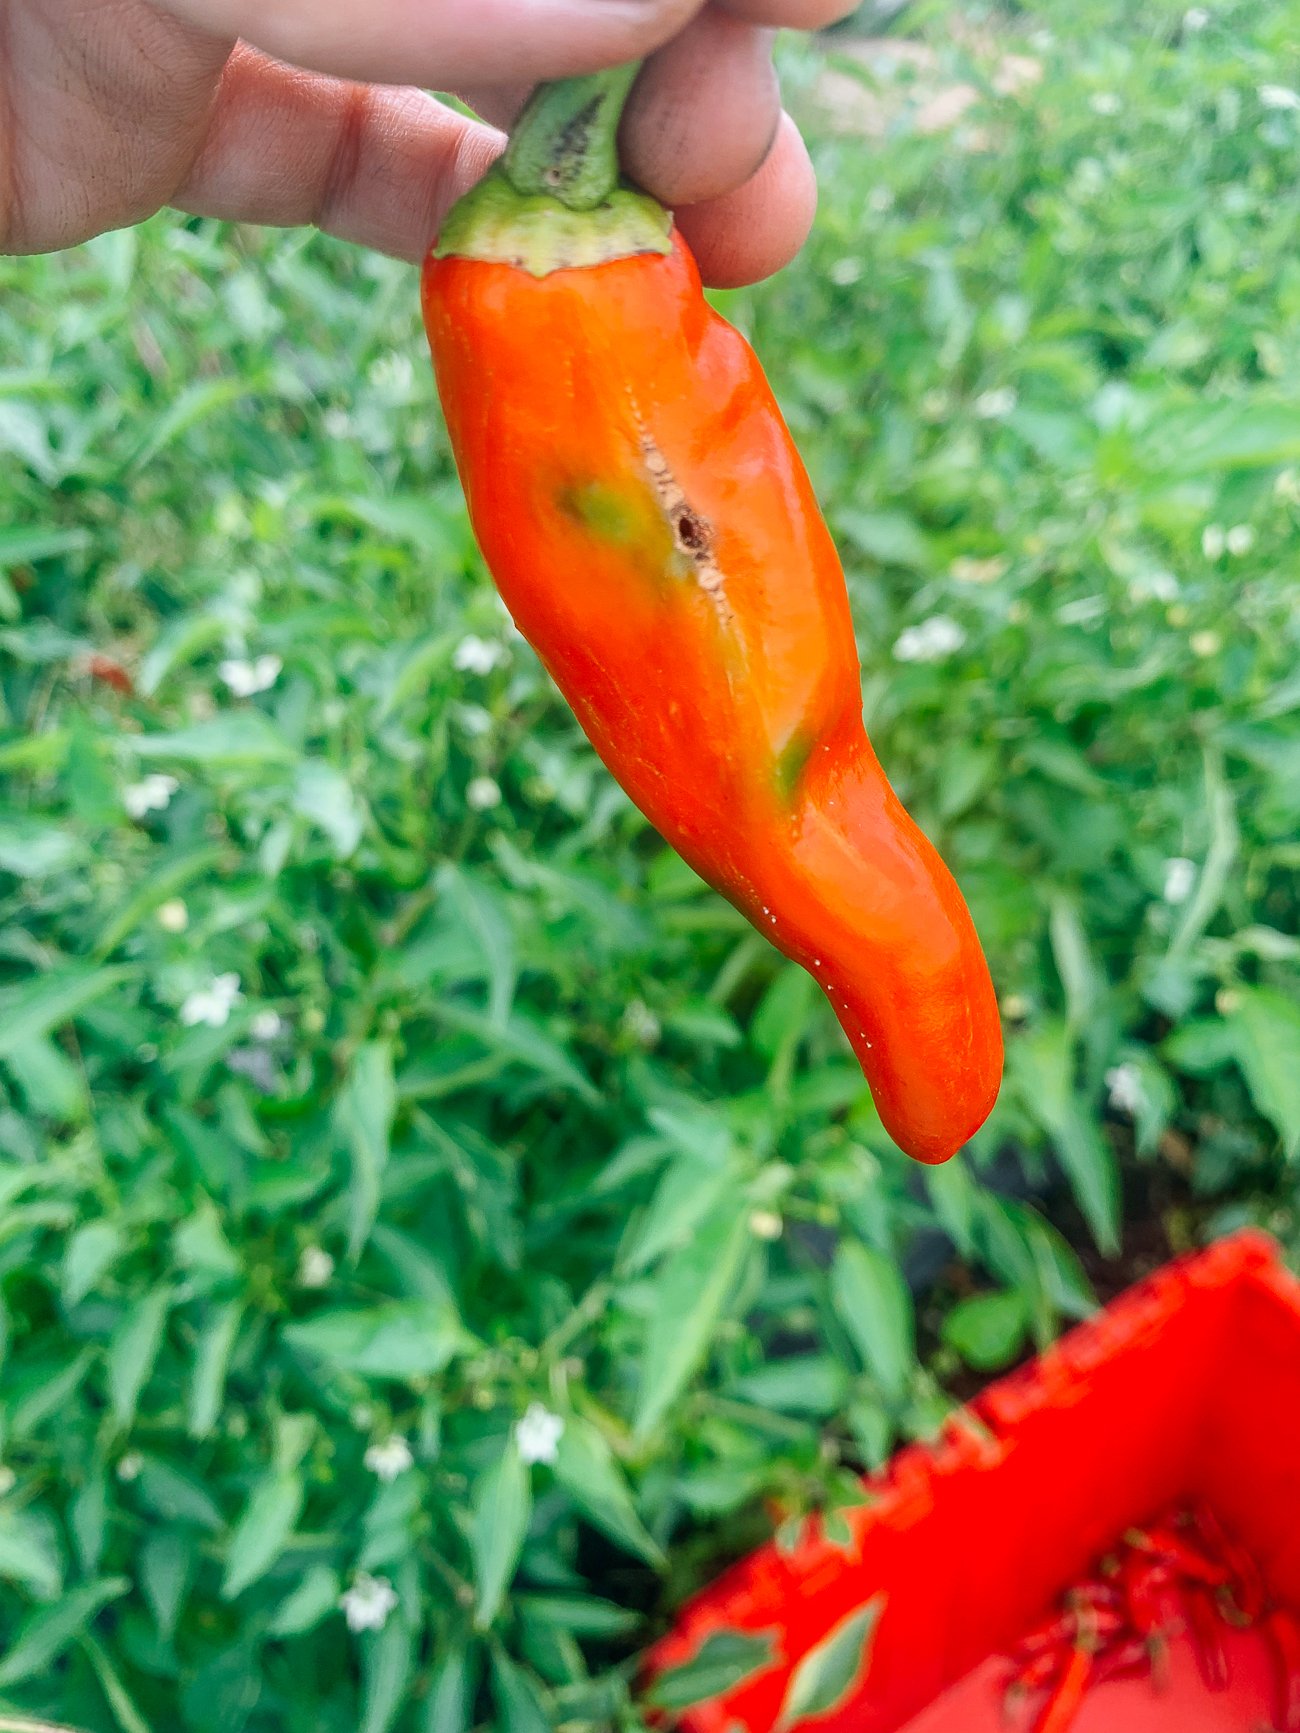 worm damage on chili pepper